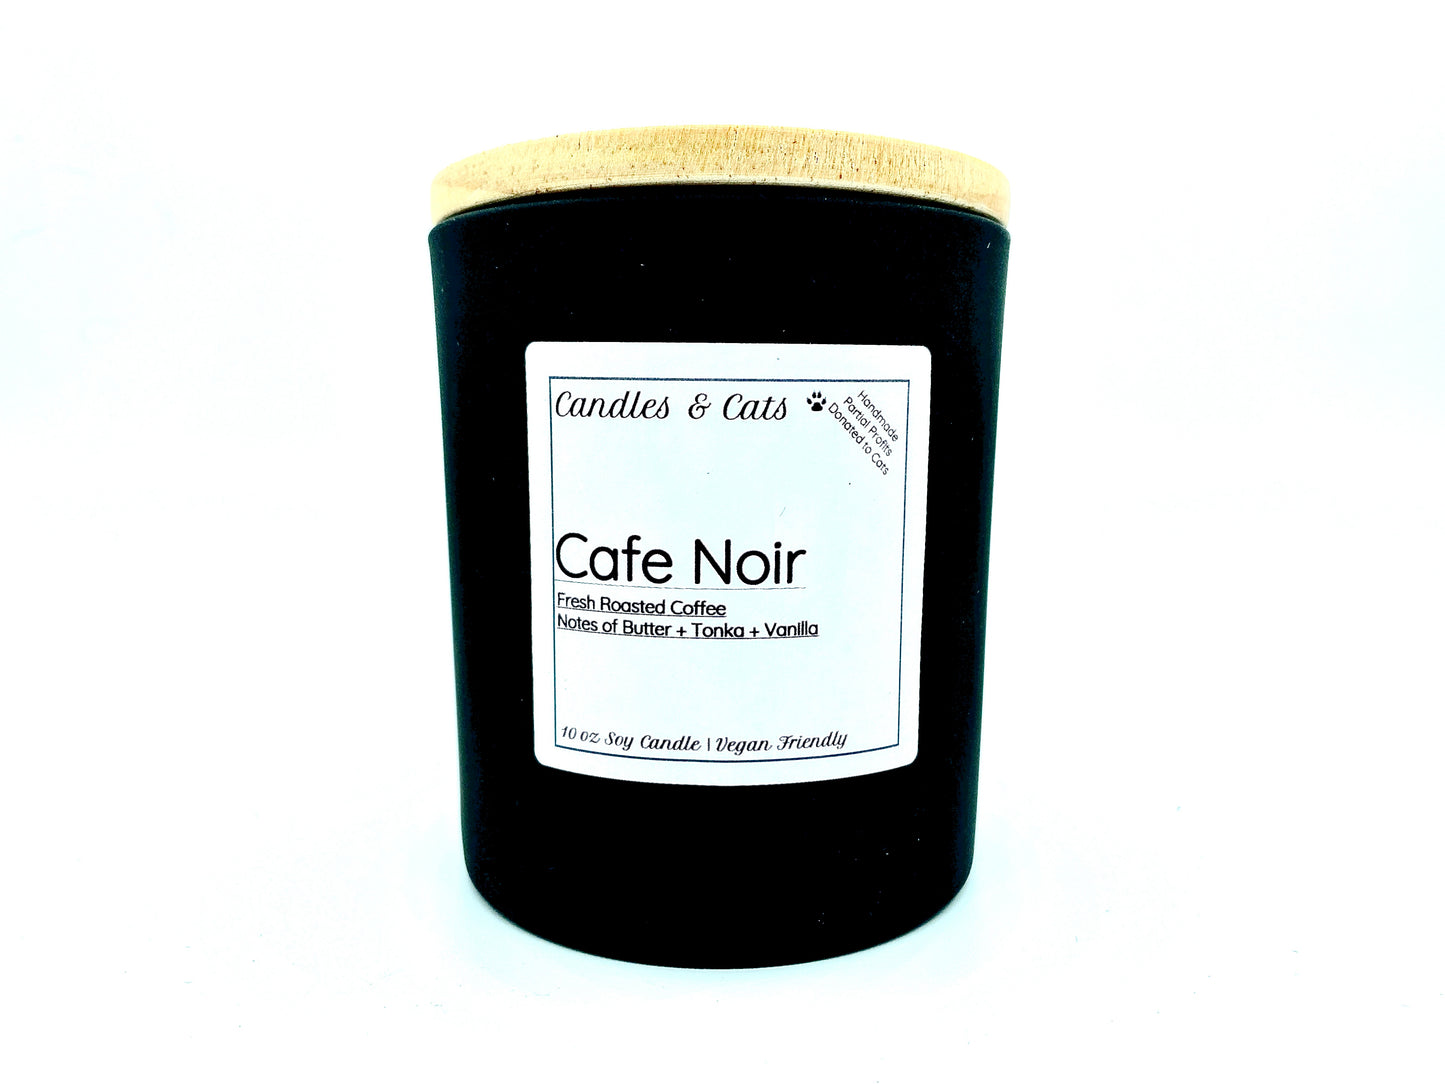 Cafe Noir